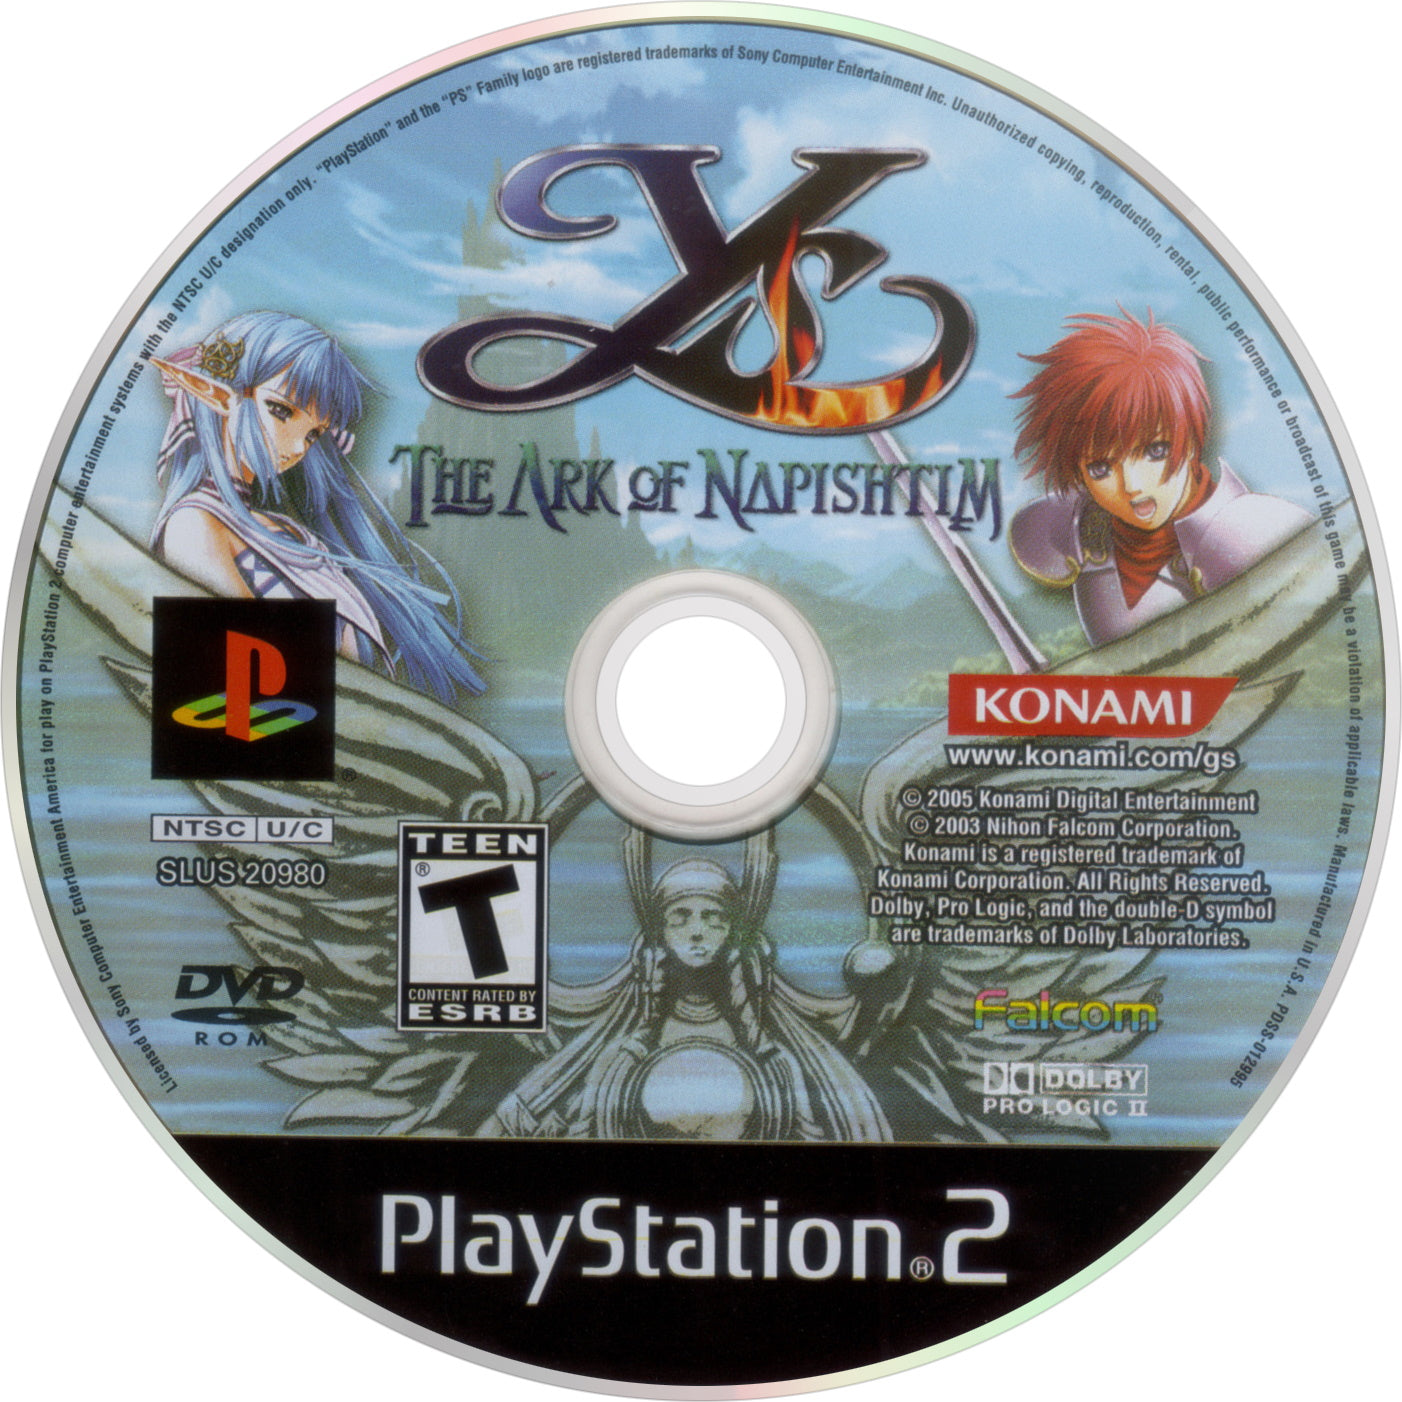 Ys: The Ark of Napishtim - PlayStation 2 (PS2) Game